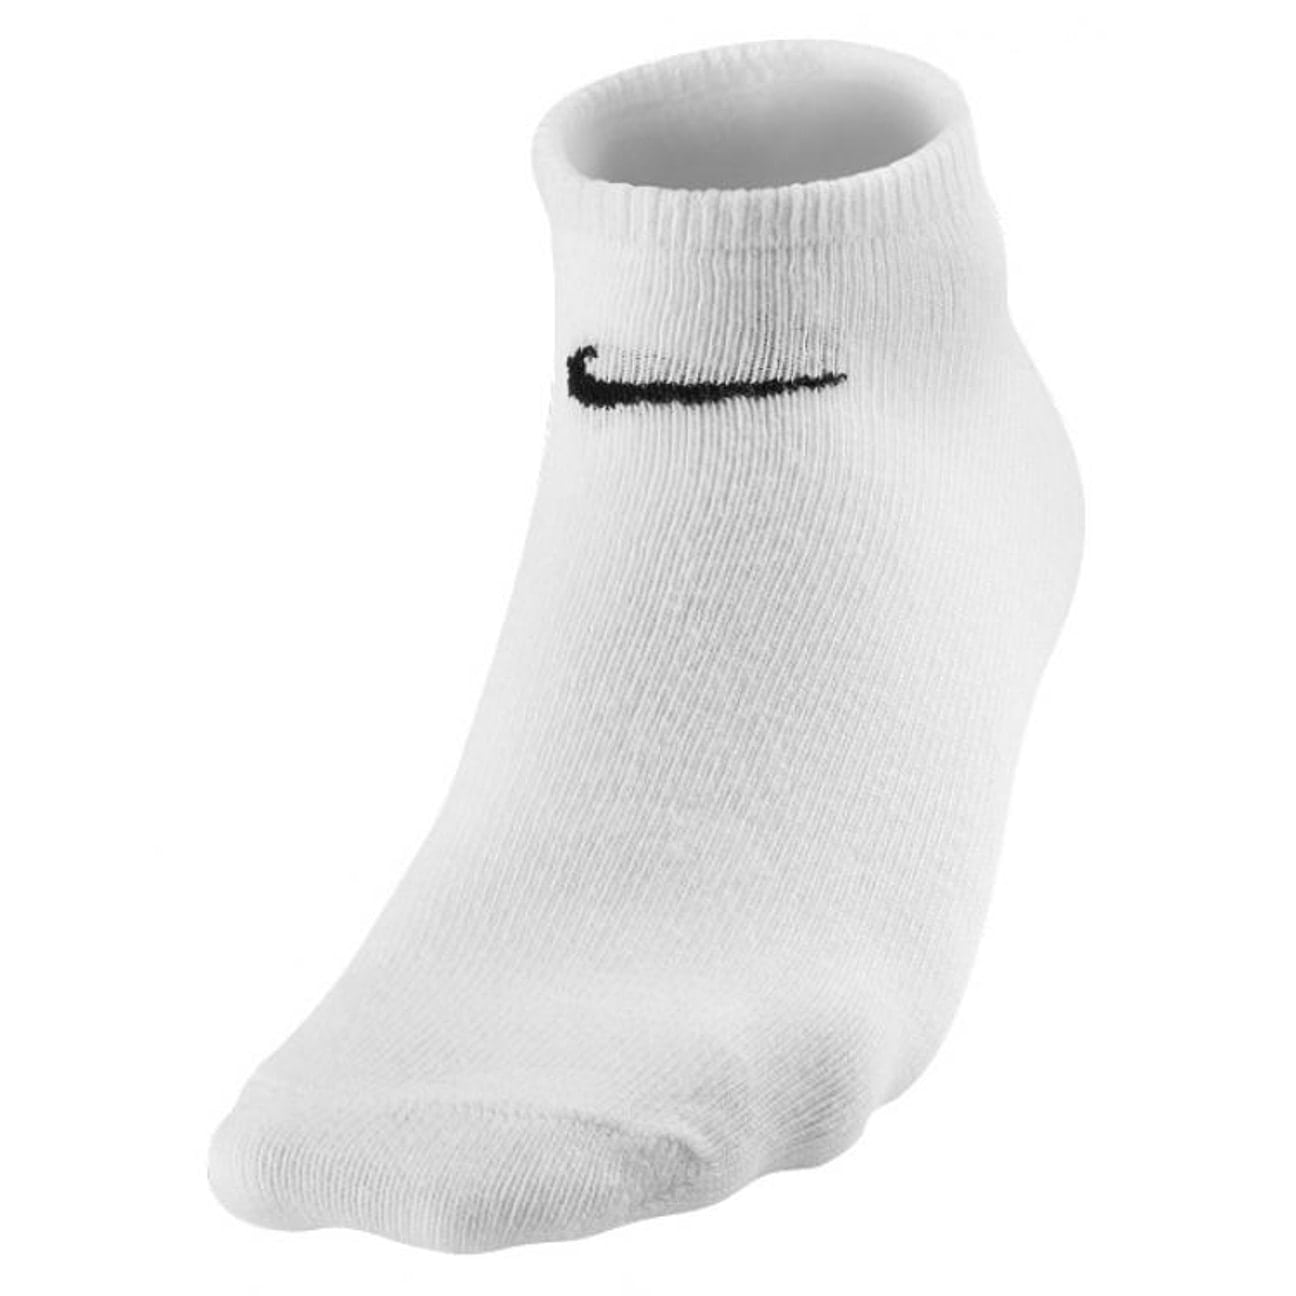 3x Value Socks by Nike - 6,95 €